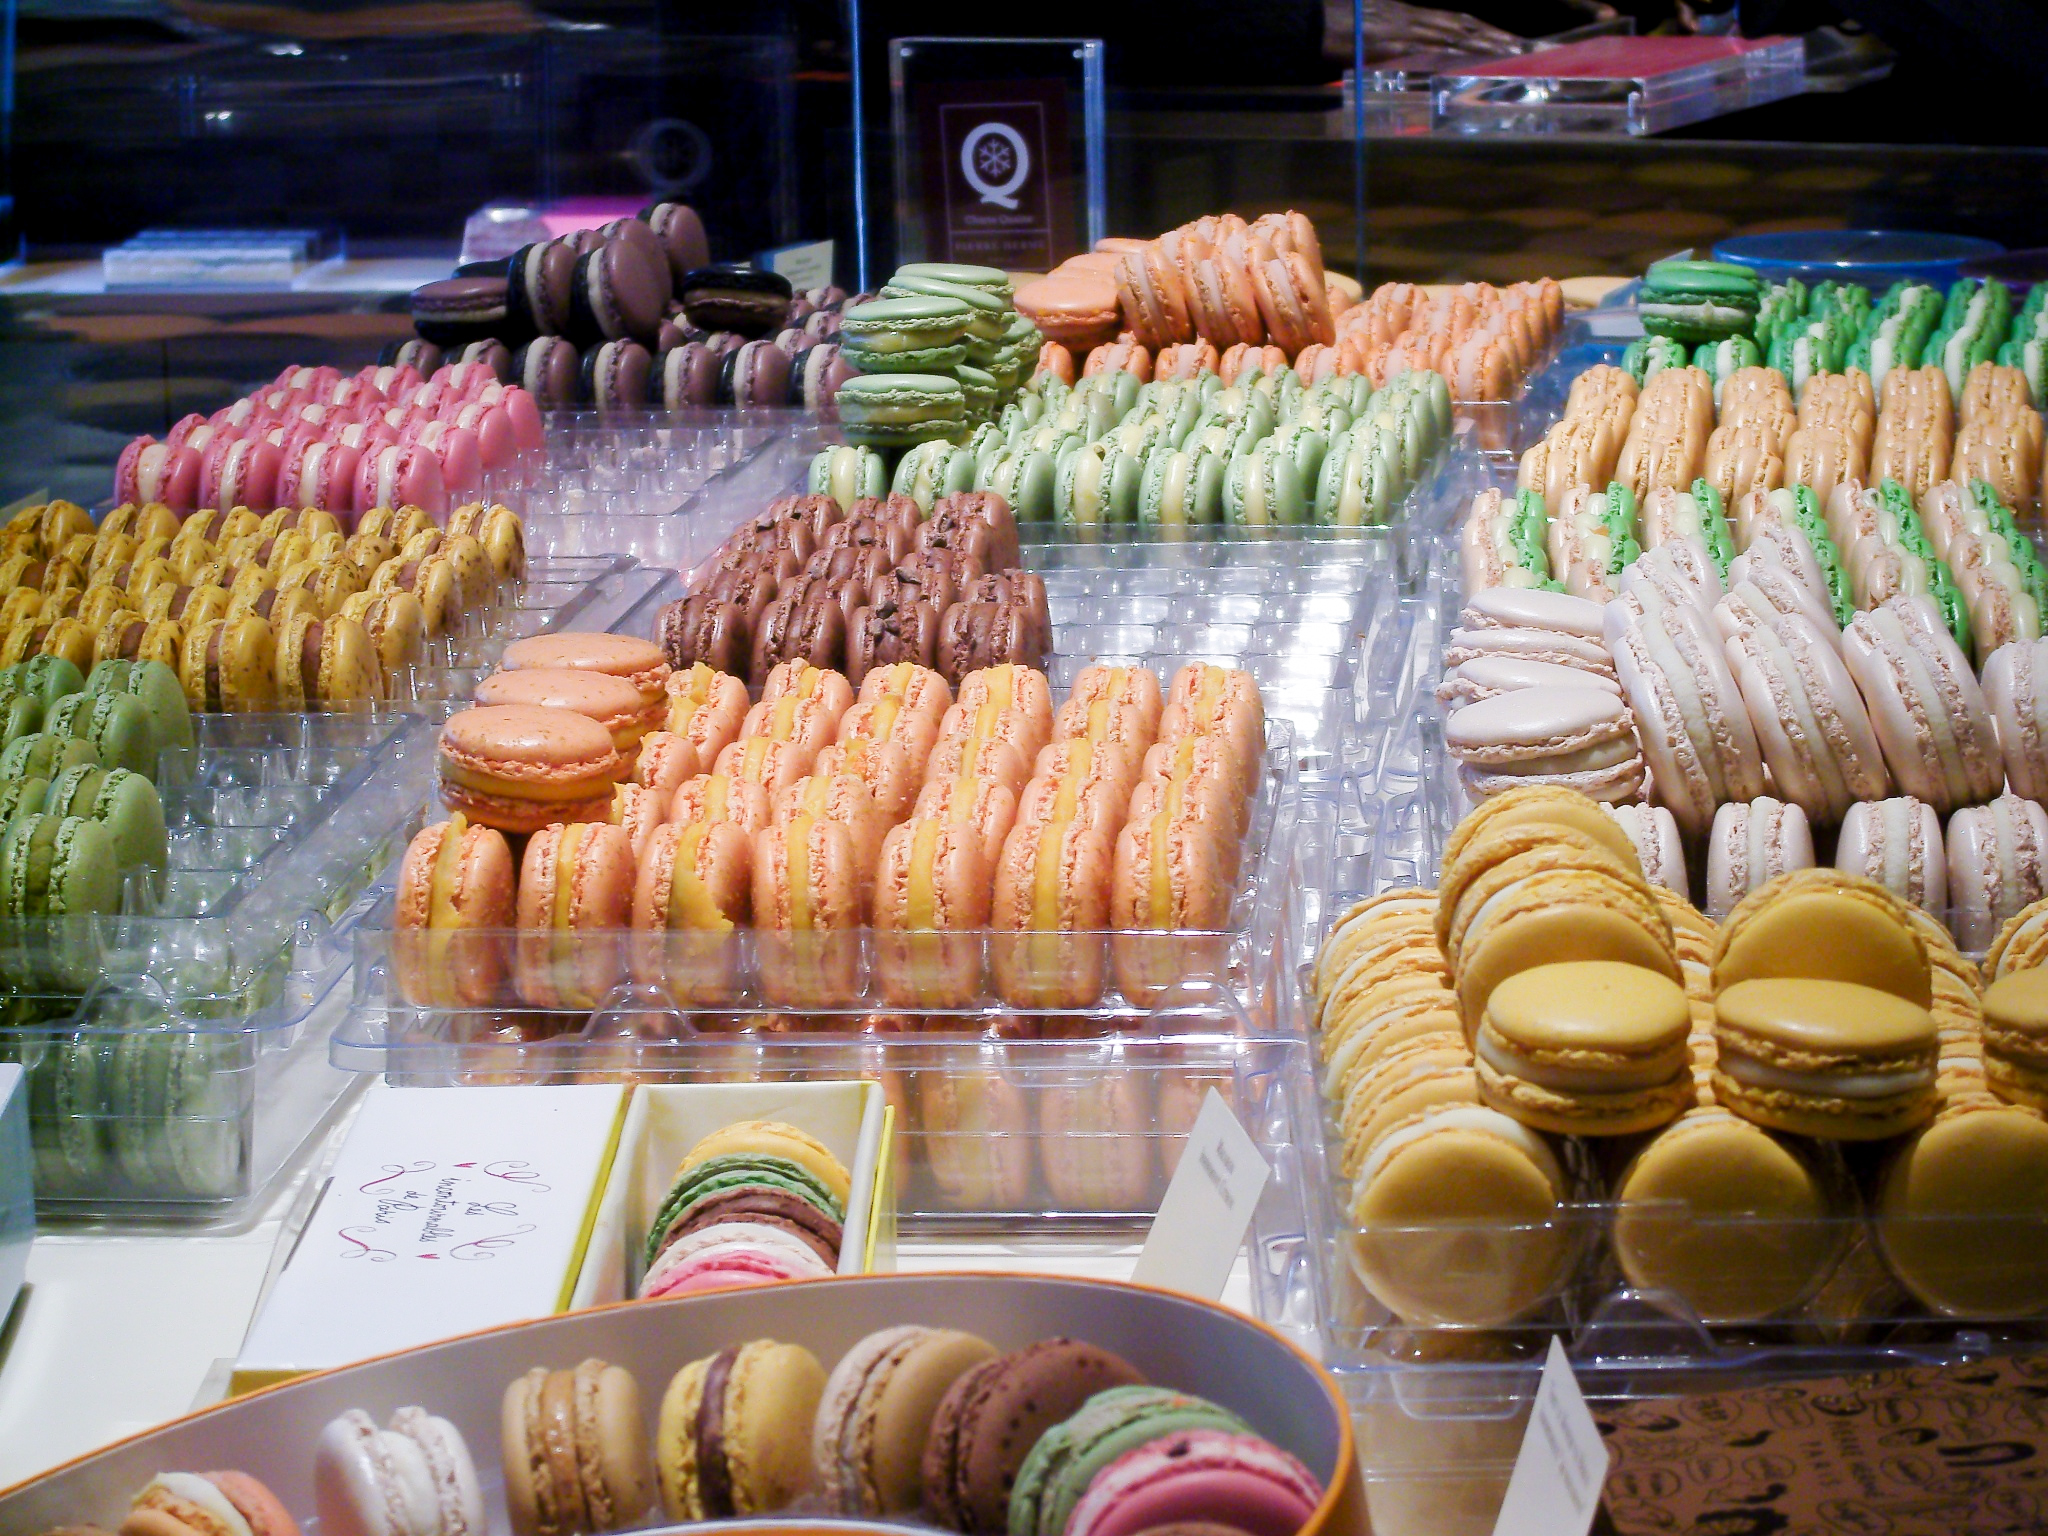 Macaron display at Pierre Hermé in Paris. Photo by alphacityguides.